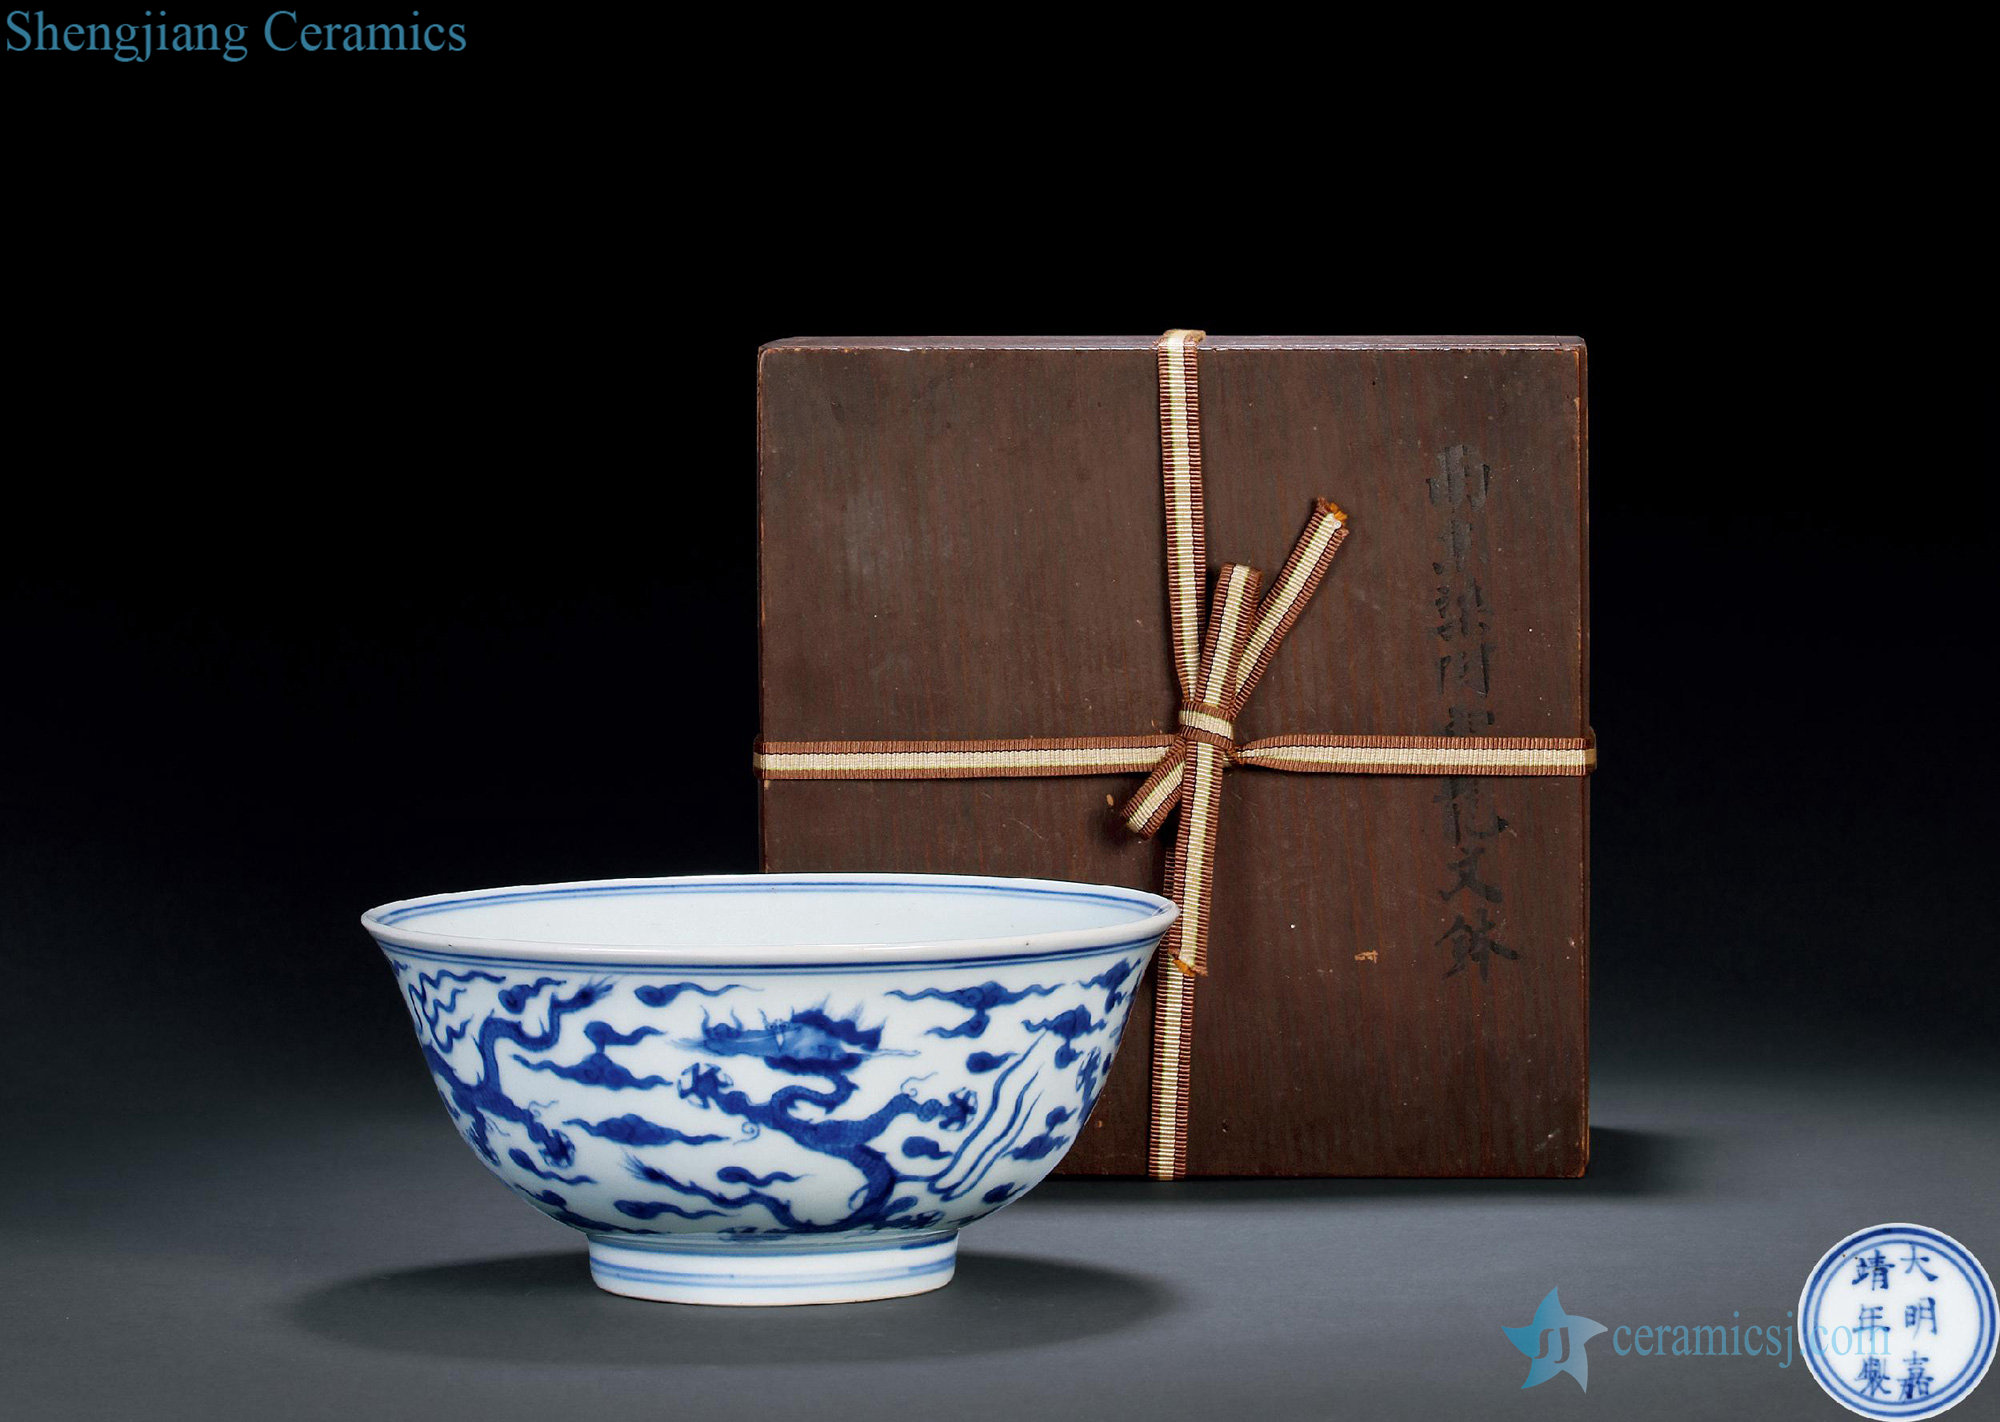 The qing emperor kangxi Blue and white imitation Ming dragon grain big bowl